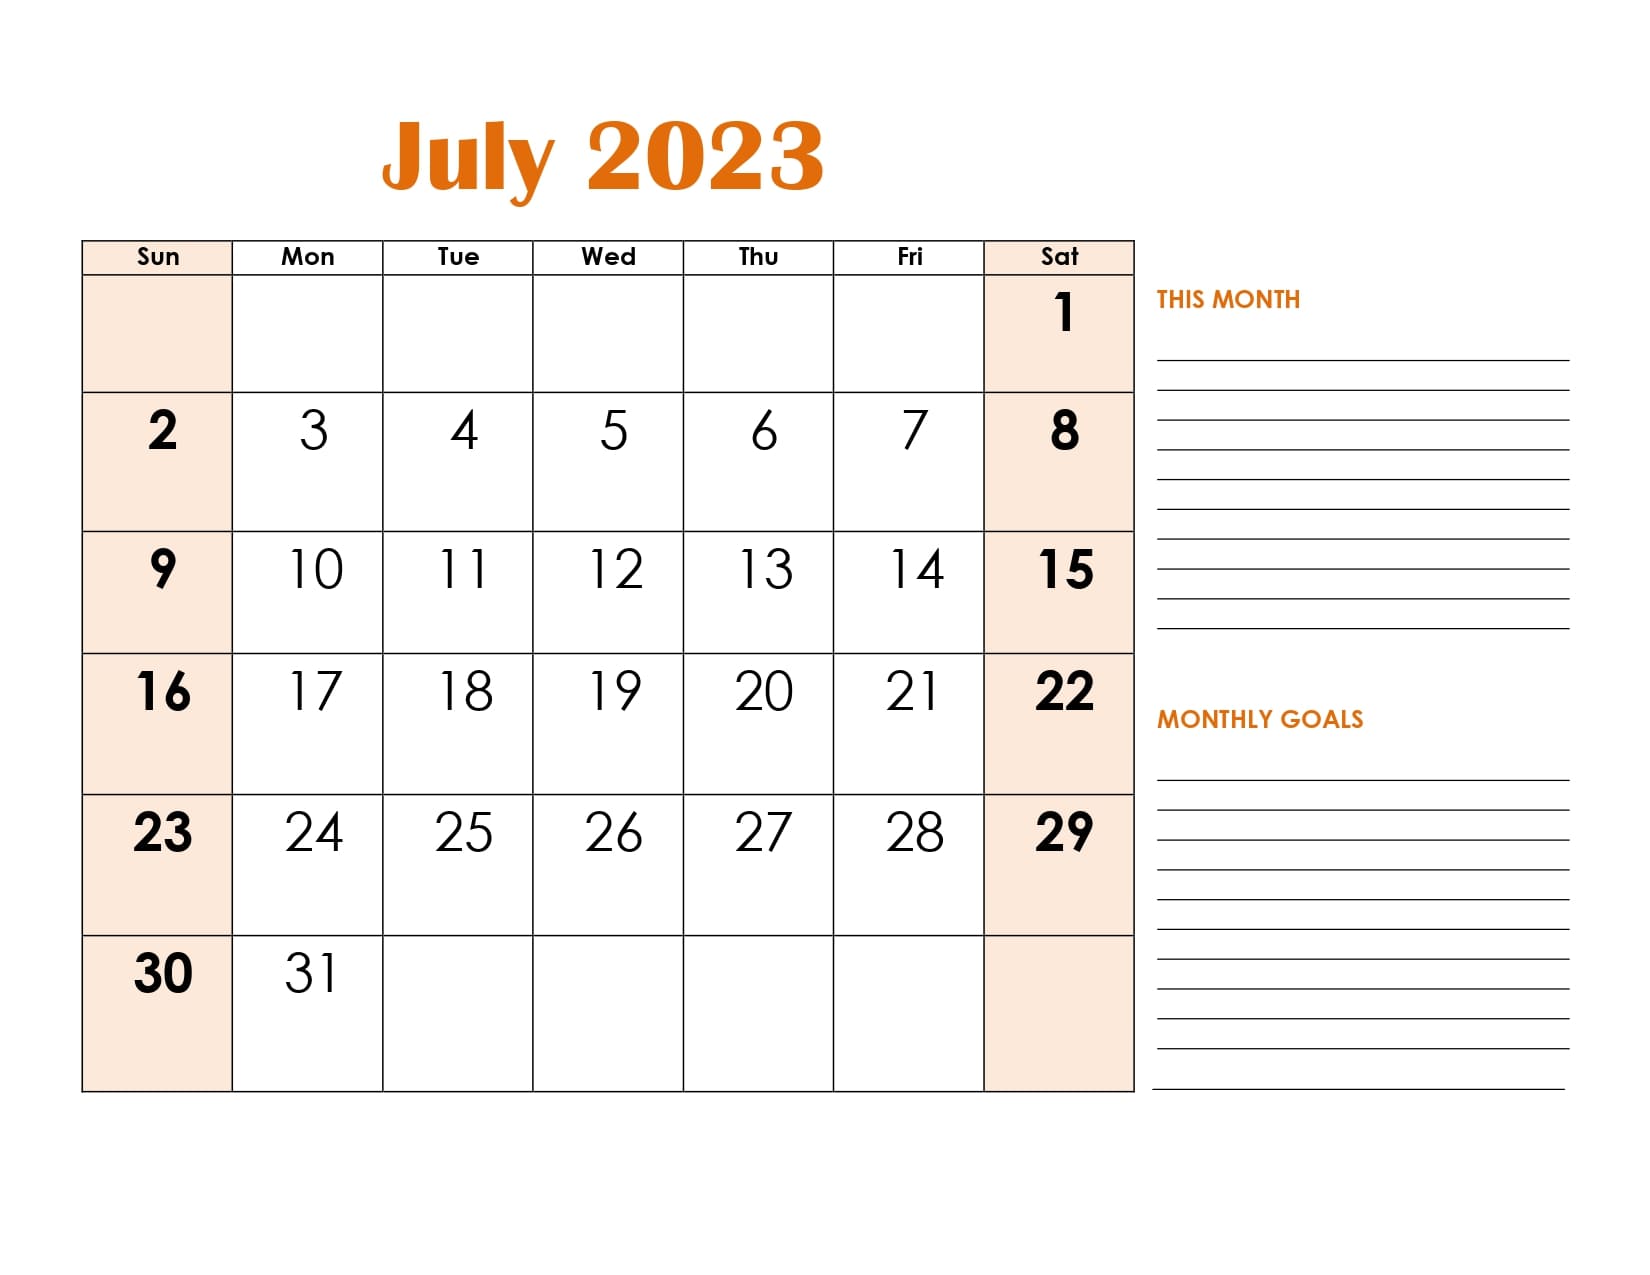 July 2023 Calendar with Goals